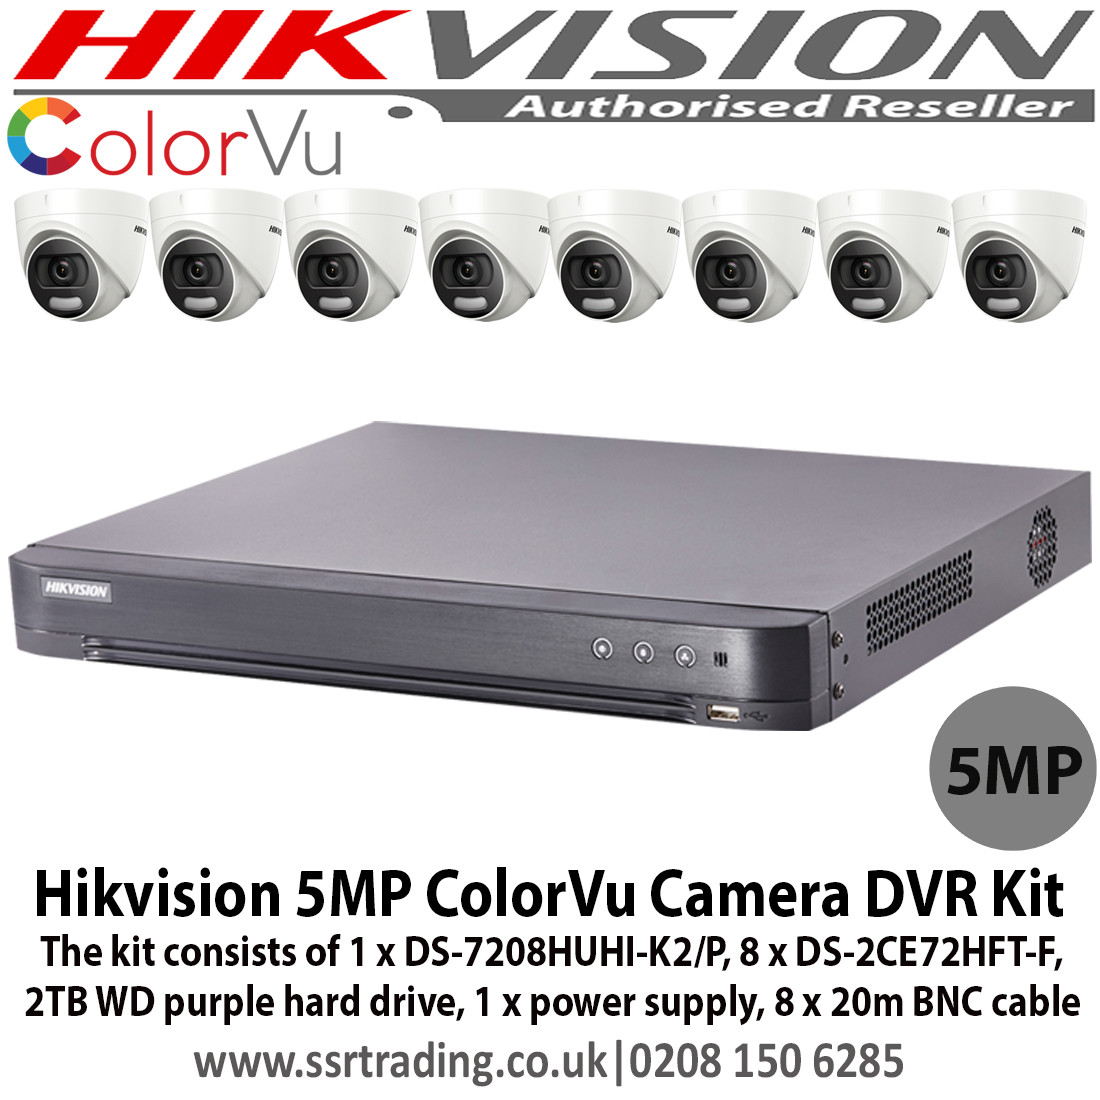 Hikvision 5MP colorVu camera surveillance system kit with 1 x 8 channel TVI Turbo 4.0 PoC 5MP DVR, 2TB WD surveillance hard drive (DS-7208HUHI-K2/P & DS-2CE72HFT-F (3.6mm)')